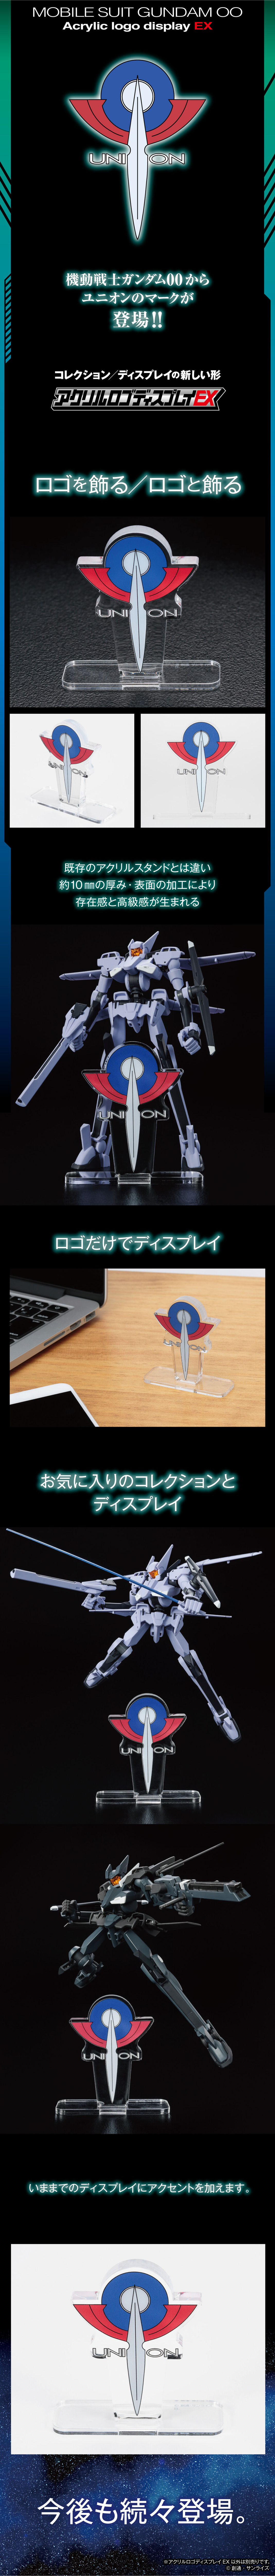 Acrylic Logo Diplay EX-Mobile Suit Gundam 00 : Union of Solar Energy and Free Nations Mark